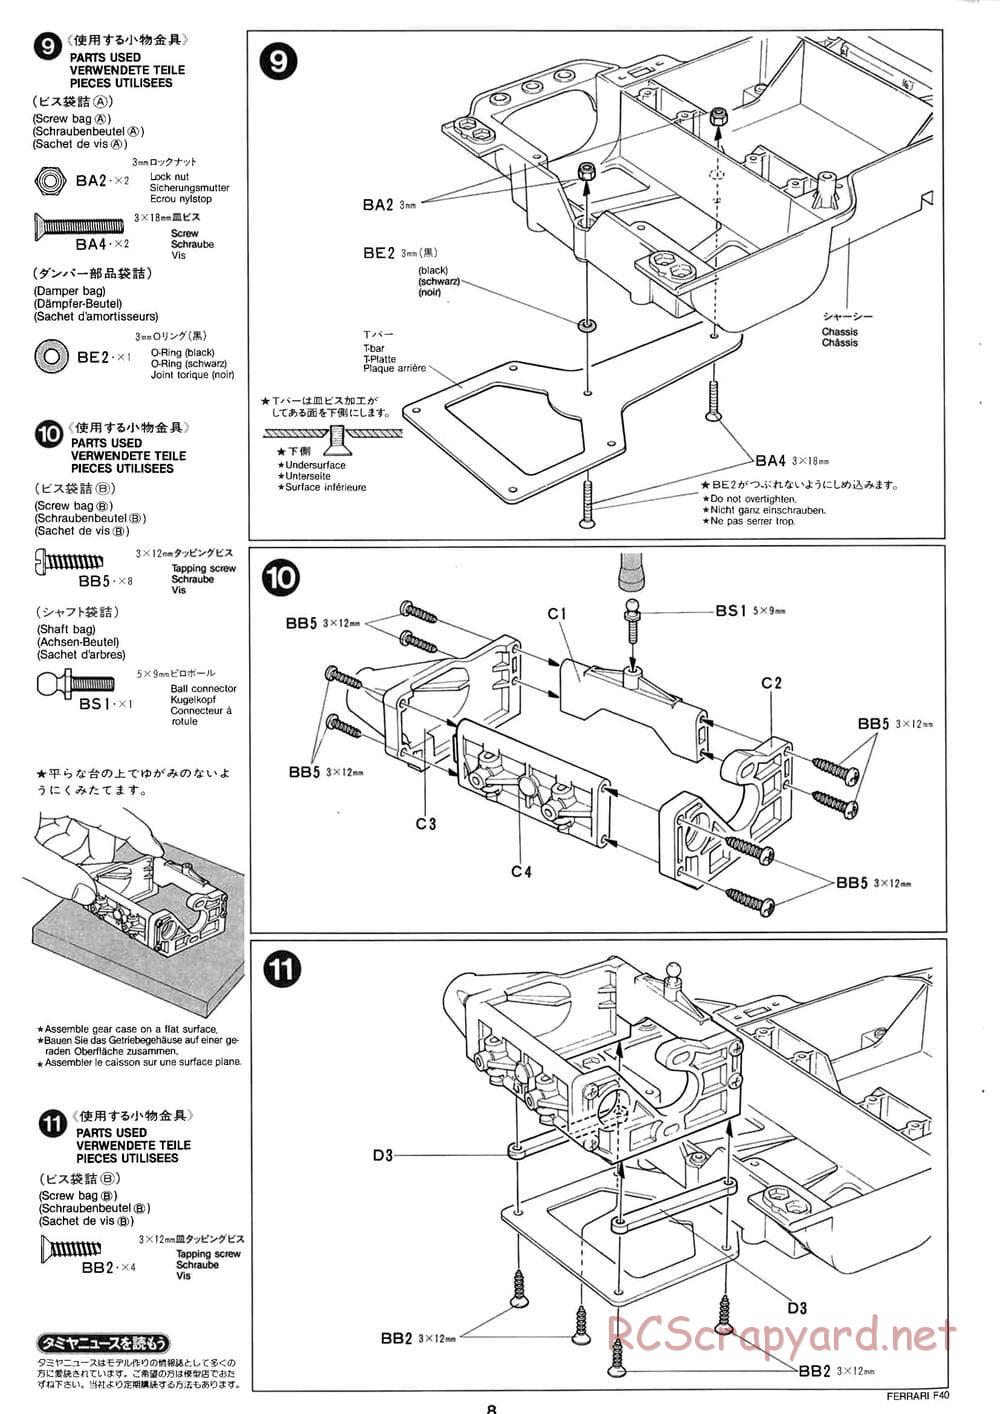 Tamiya - Ferrari F40 - Group-C Chassis - Manual - Page 8